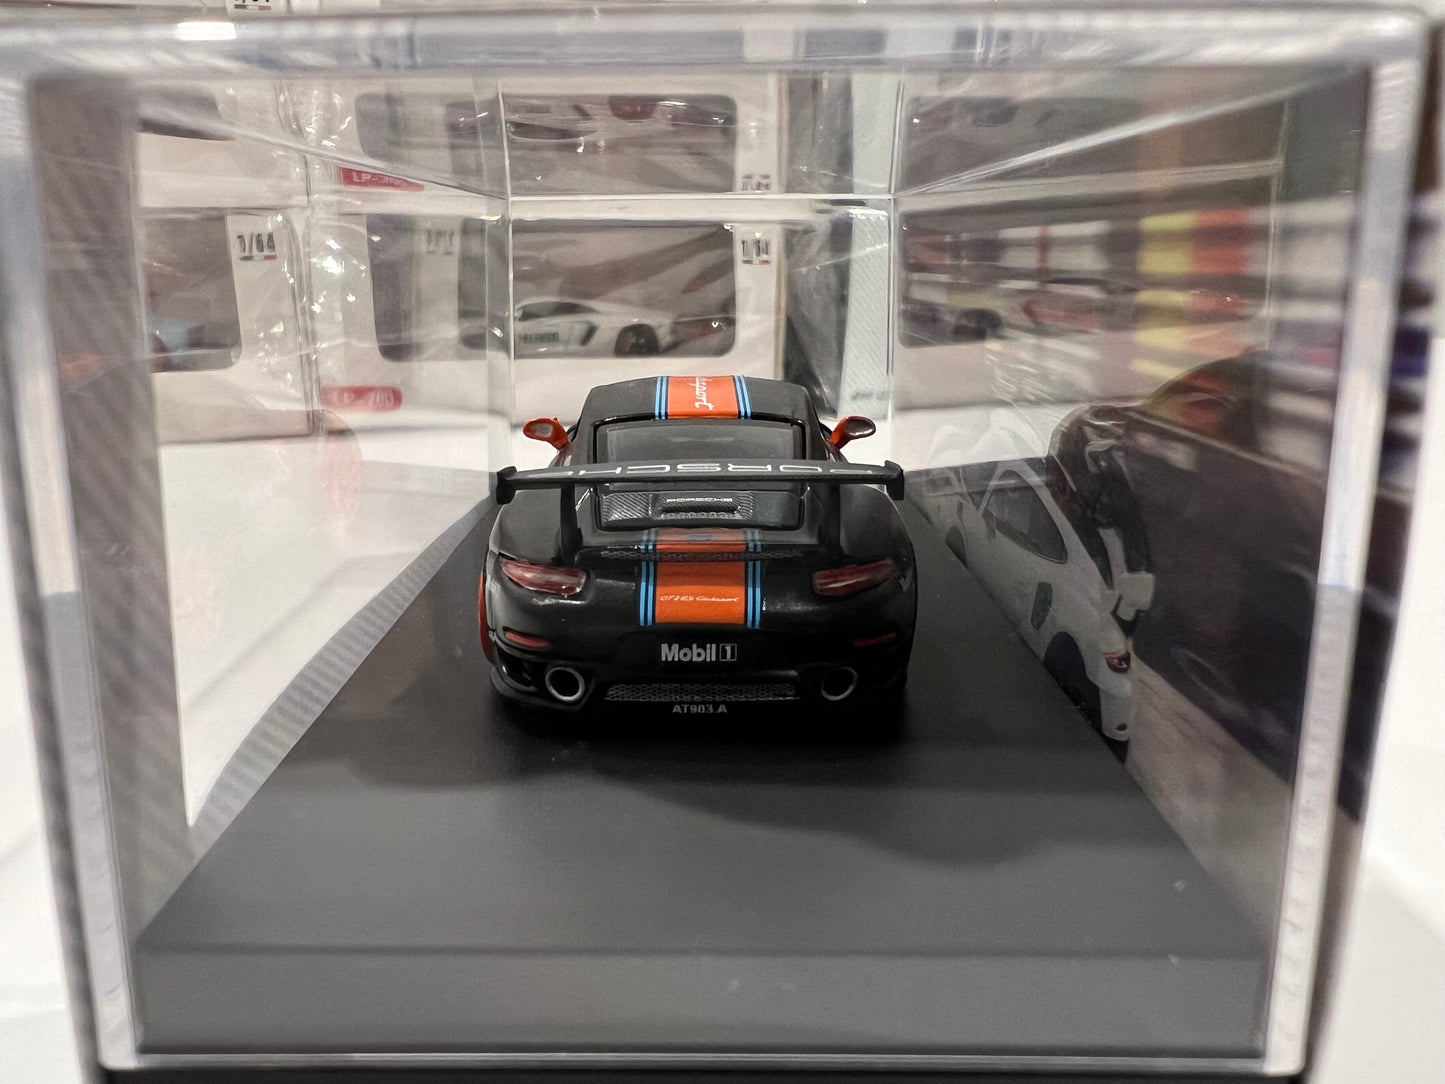 1:64 Scale Porsche 911 GT2 RS Mobil Limited Edition